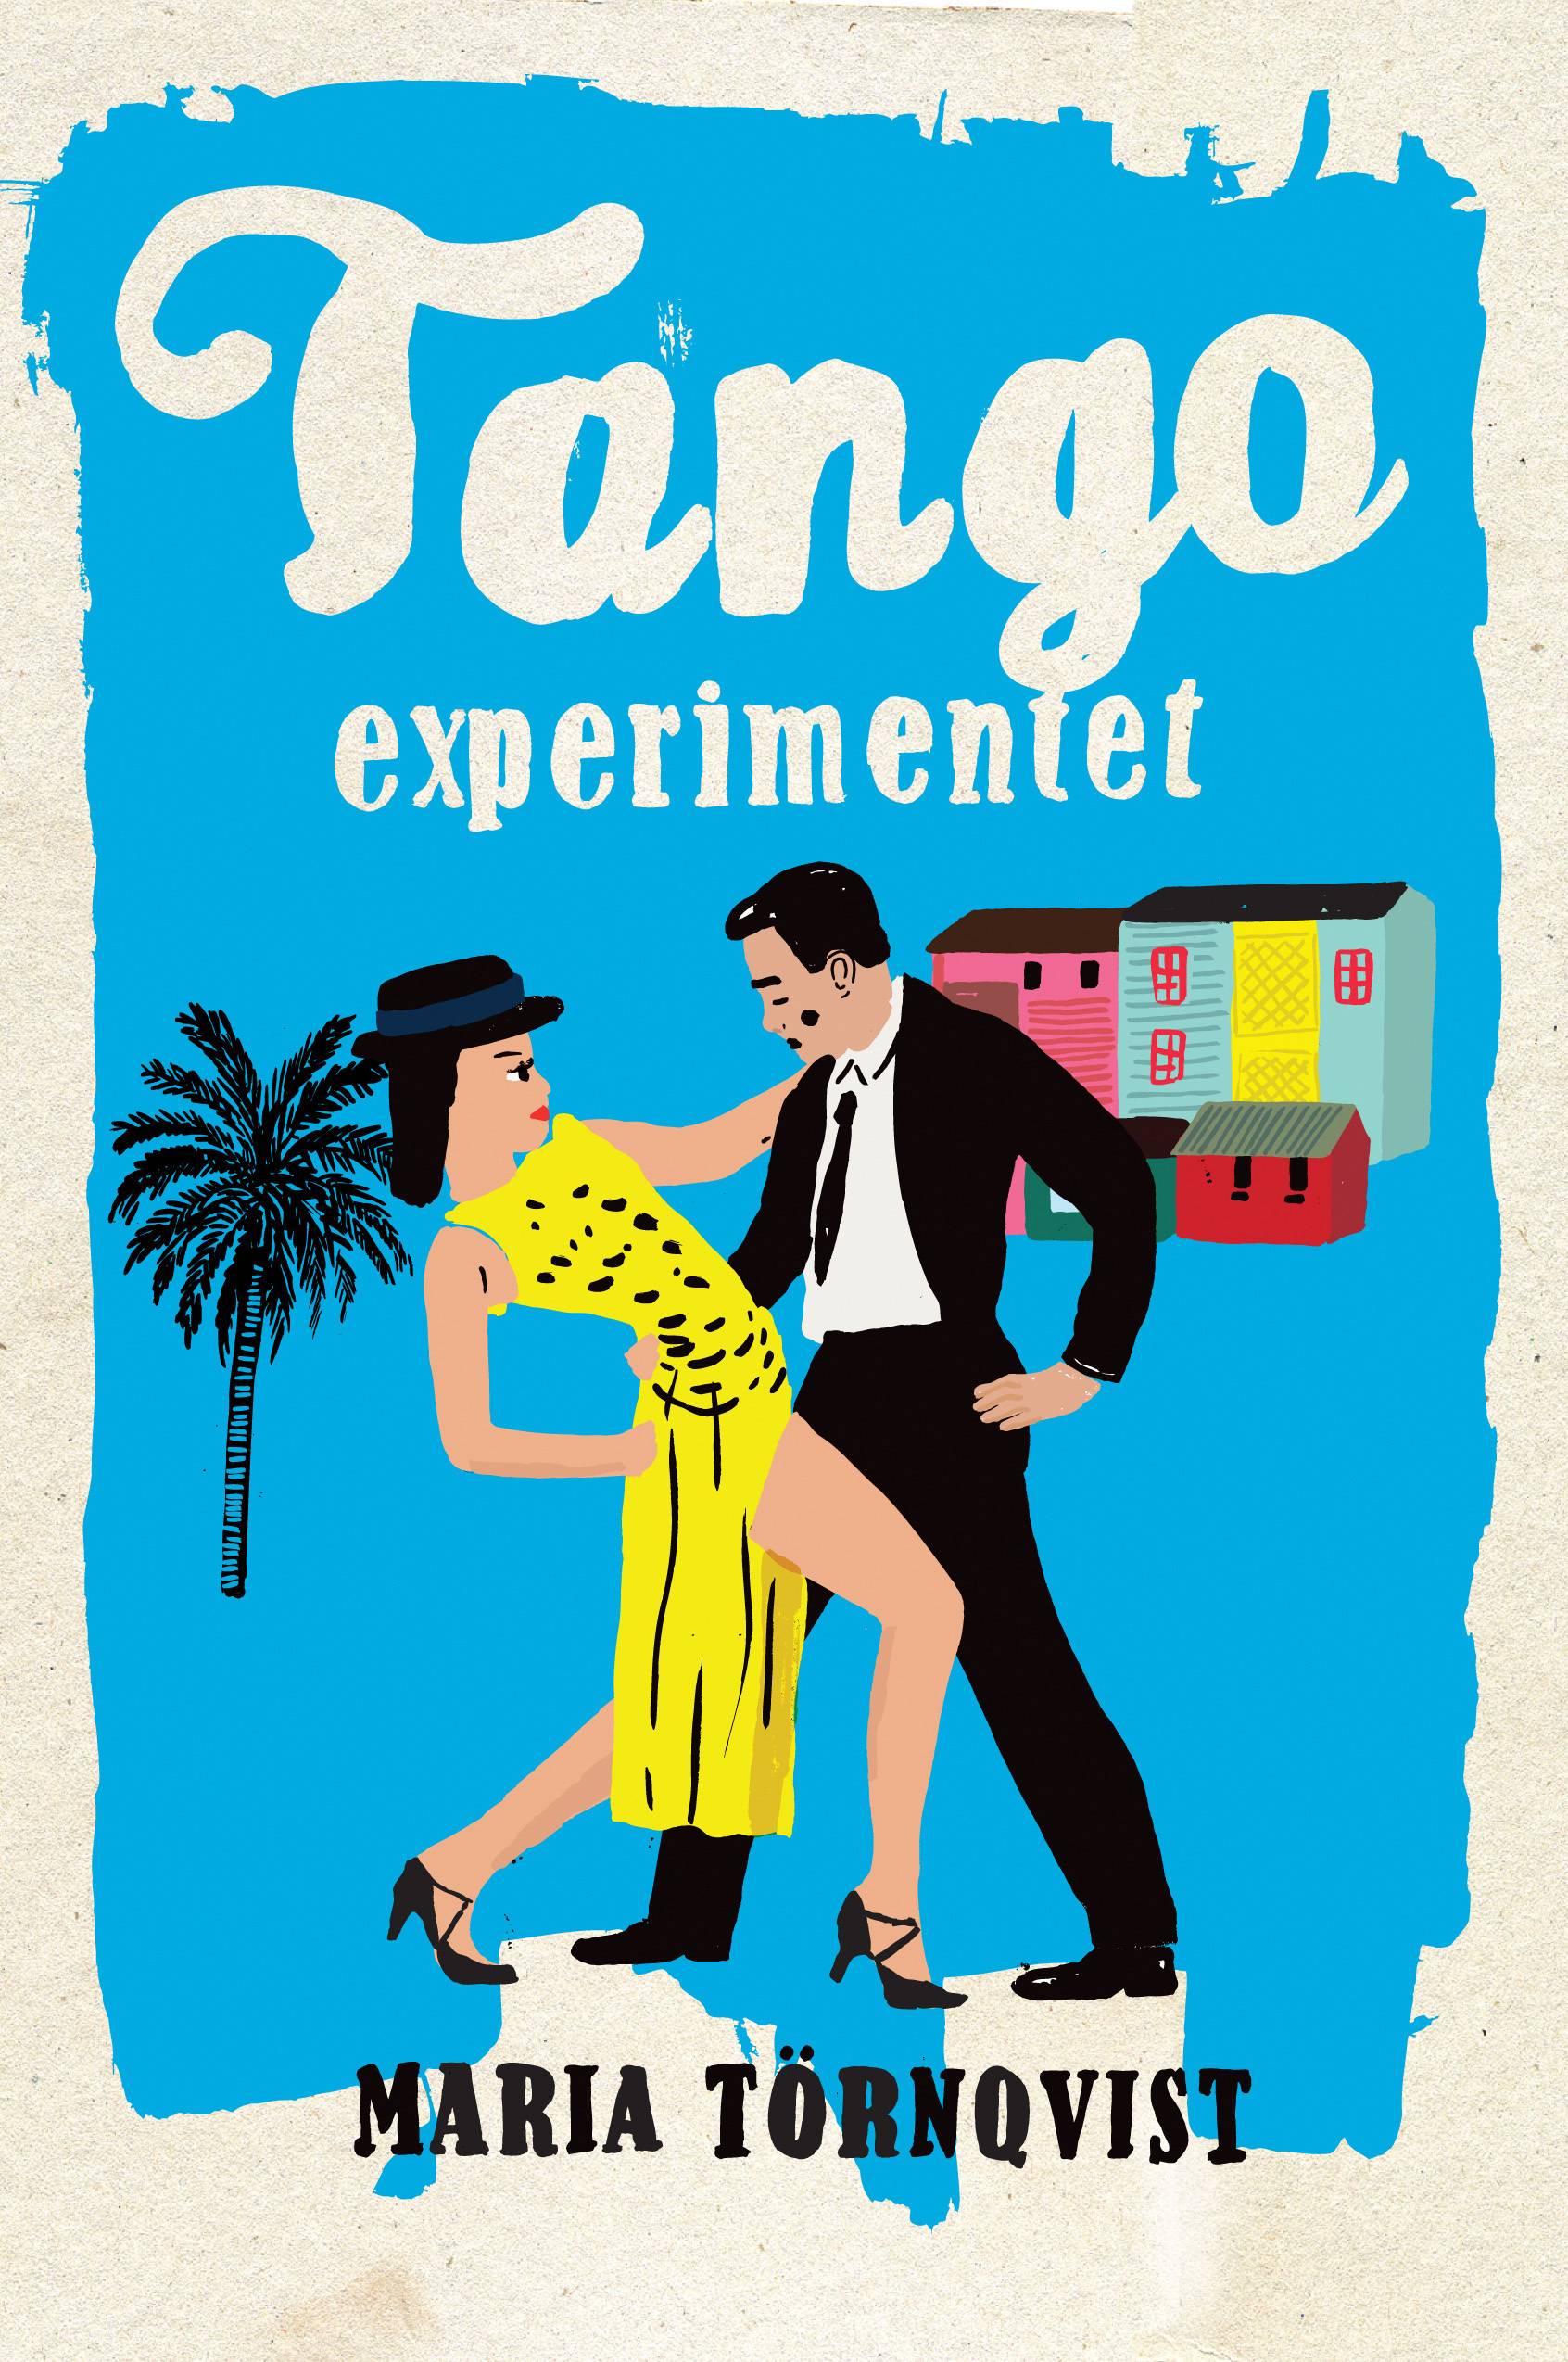 Tangoexperimentet